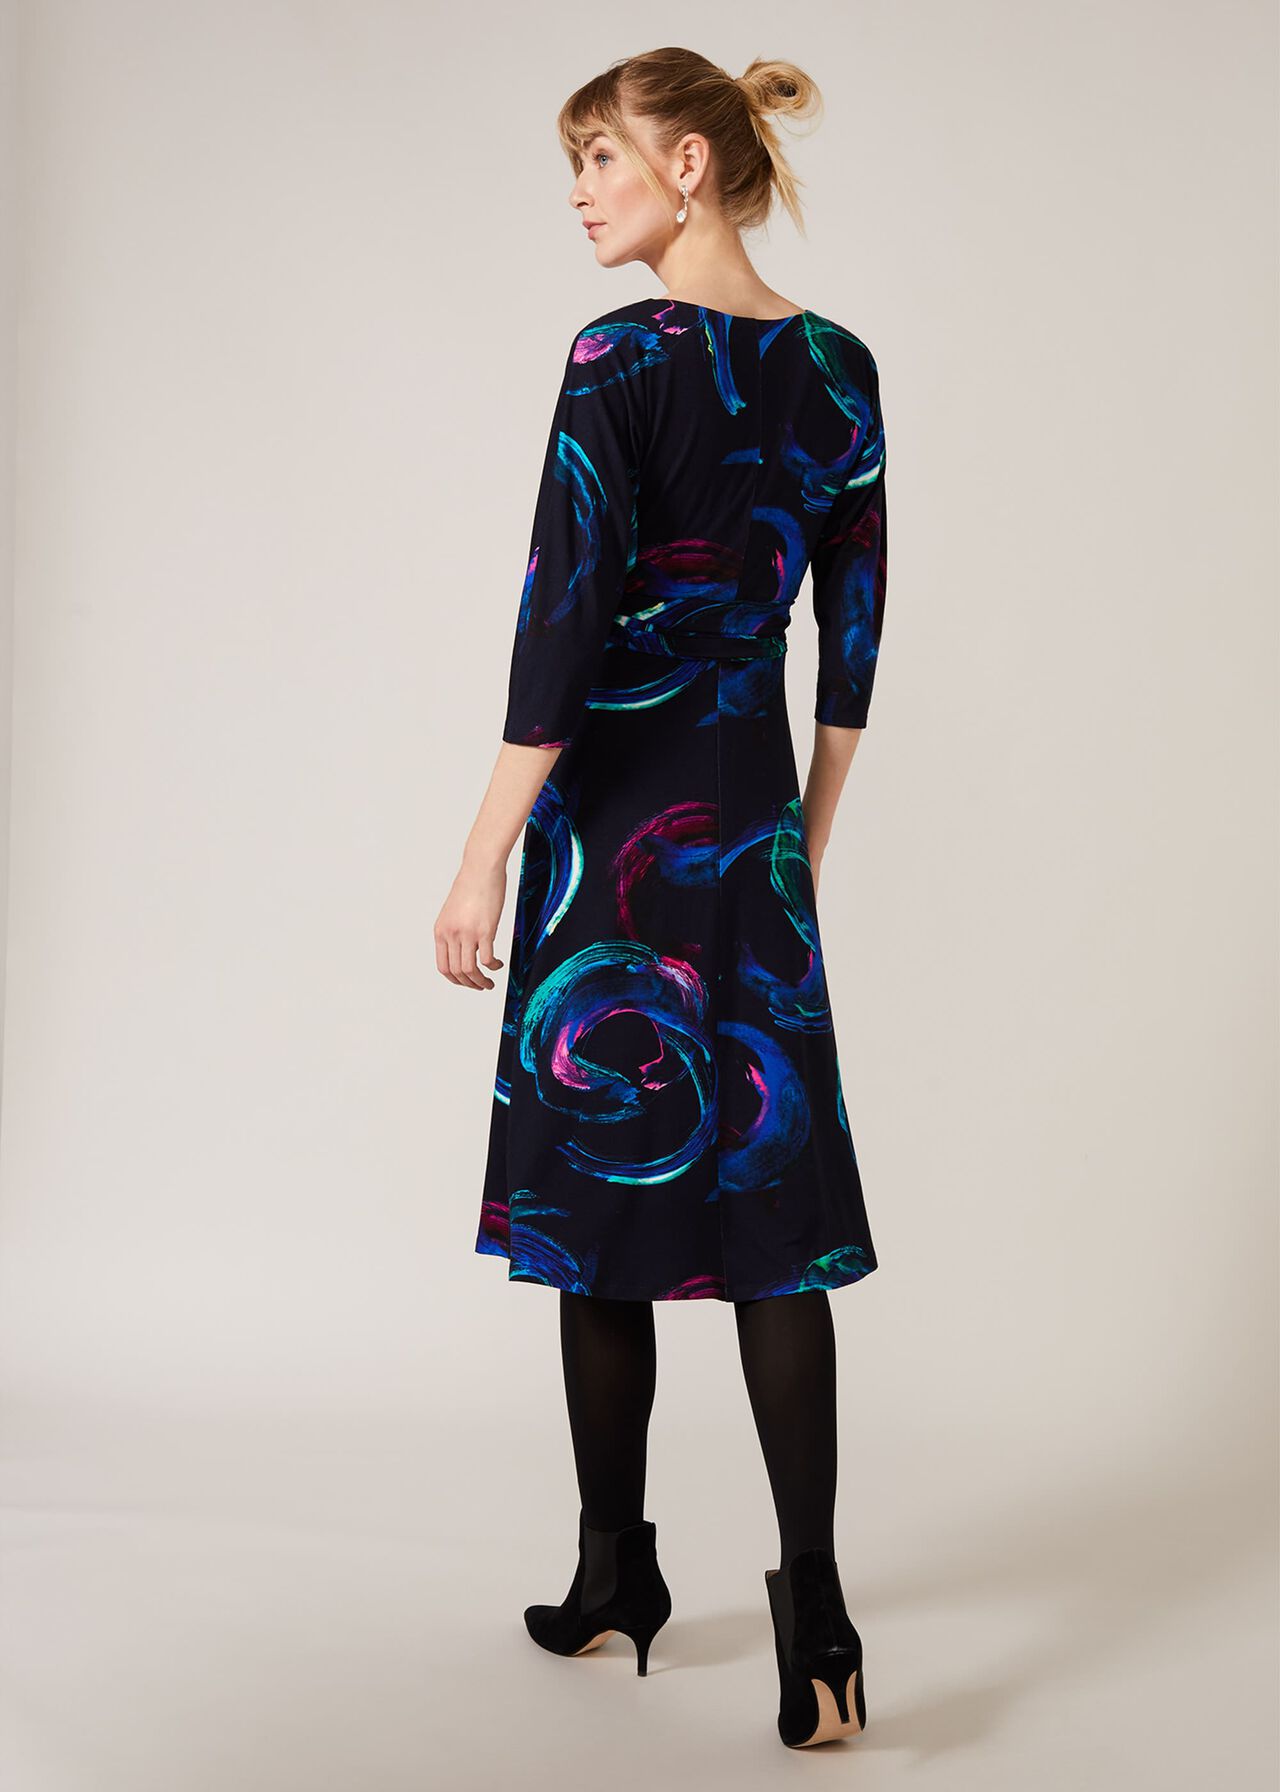 Viola Swirl Print Dress